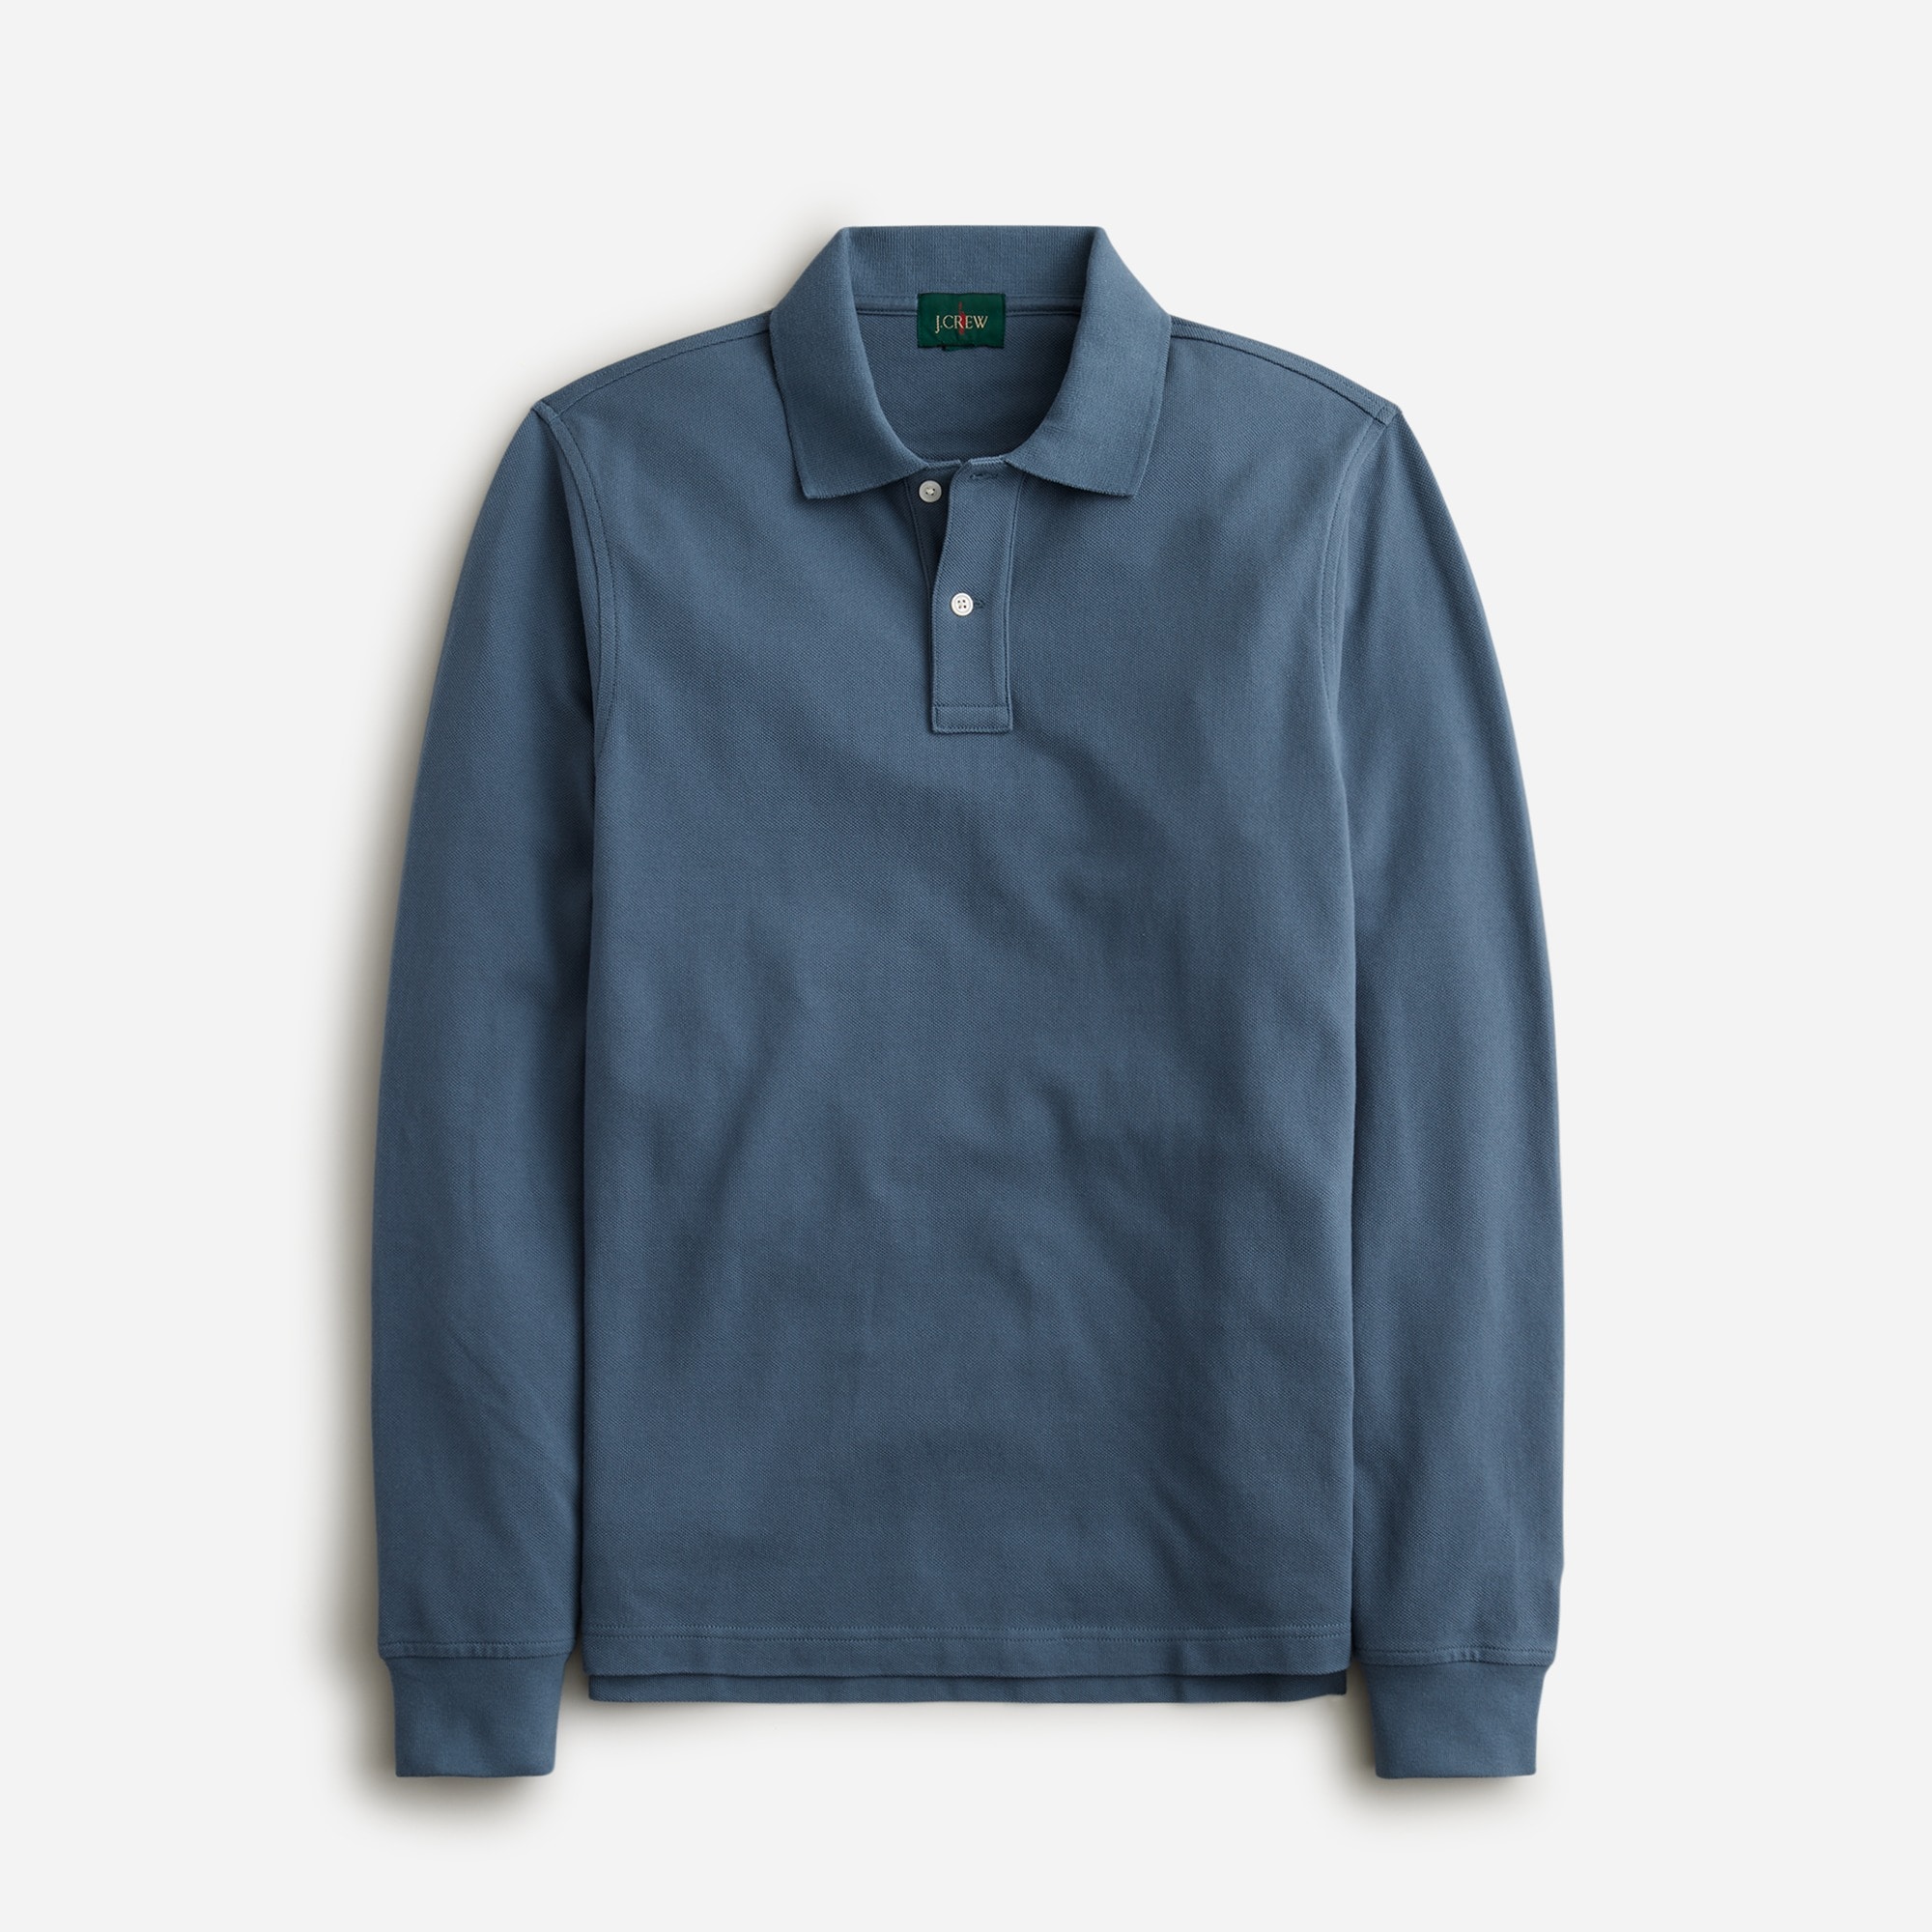 Jcrew Long-sleeve classic pique polo shirt